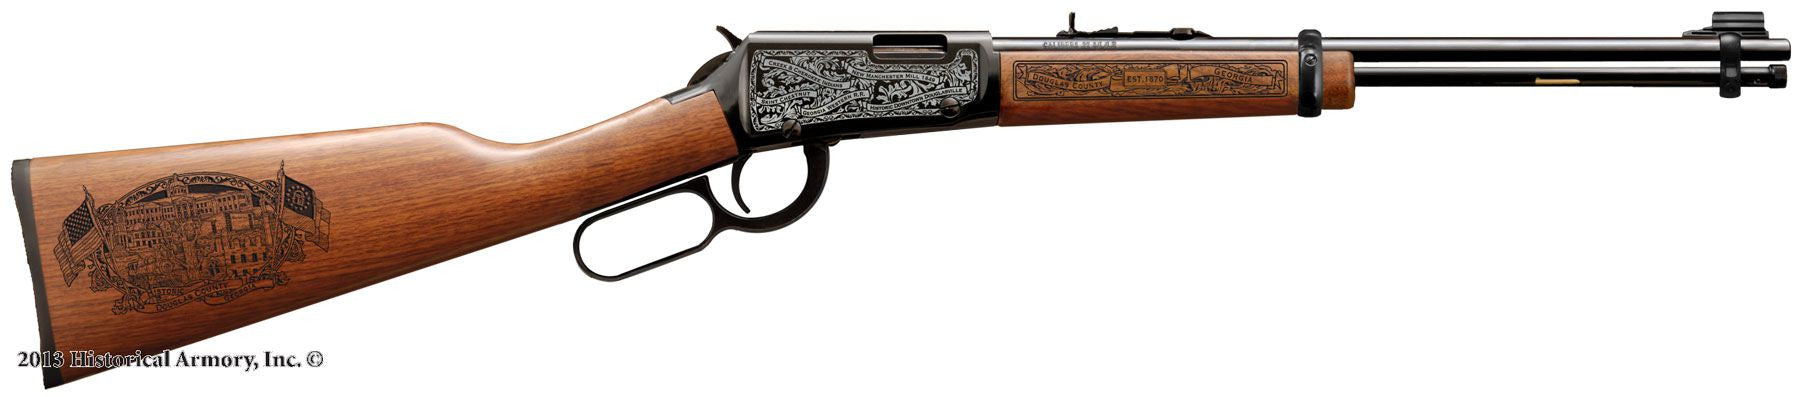 Douglas county georgia engraved rifle H001